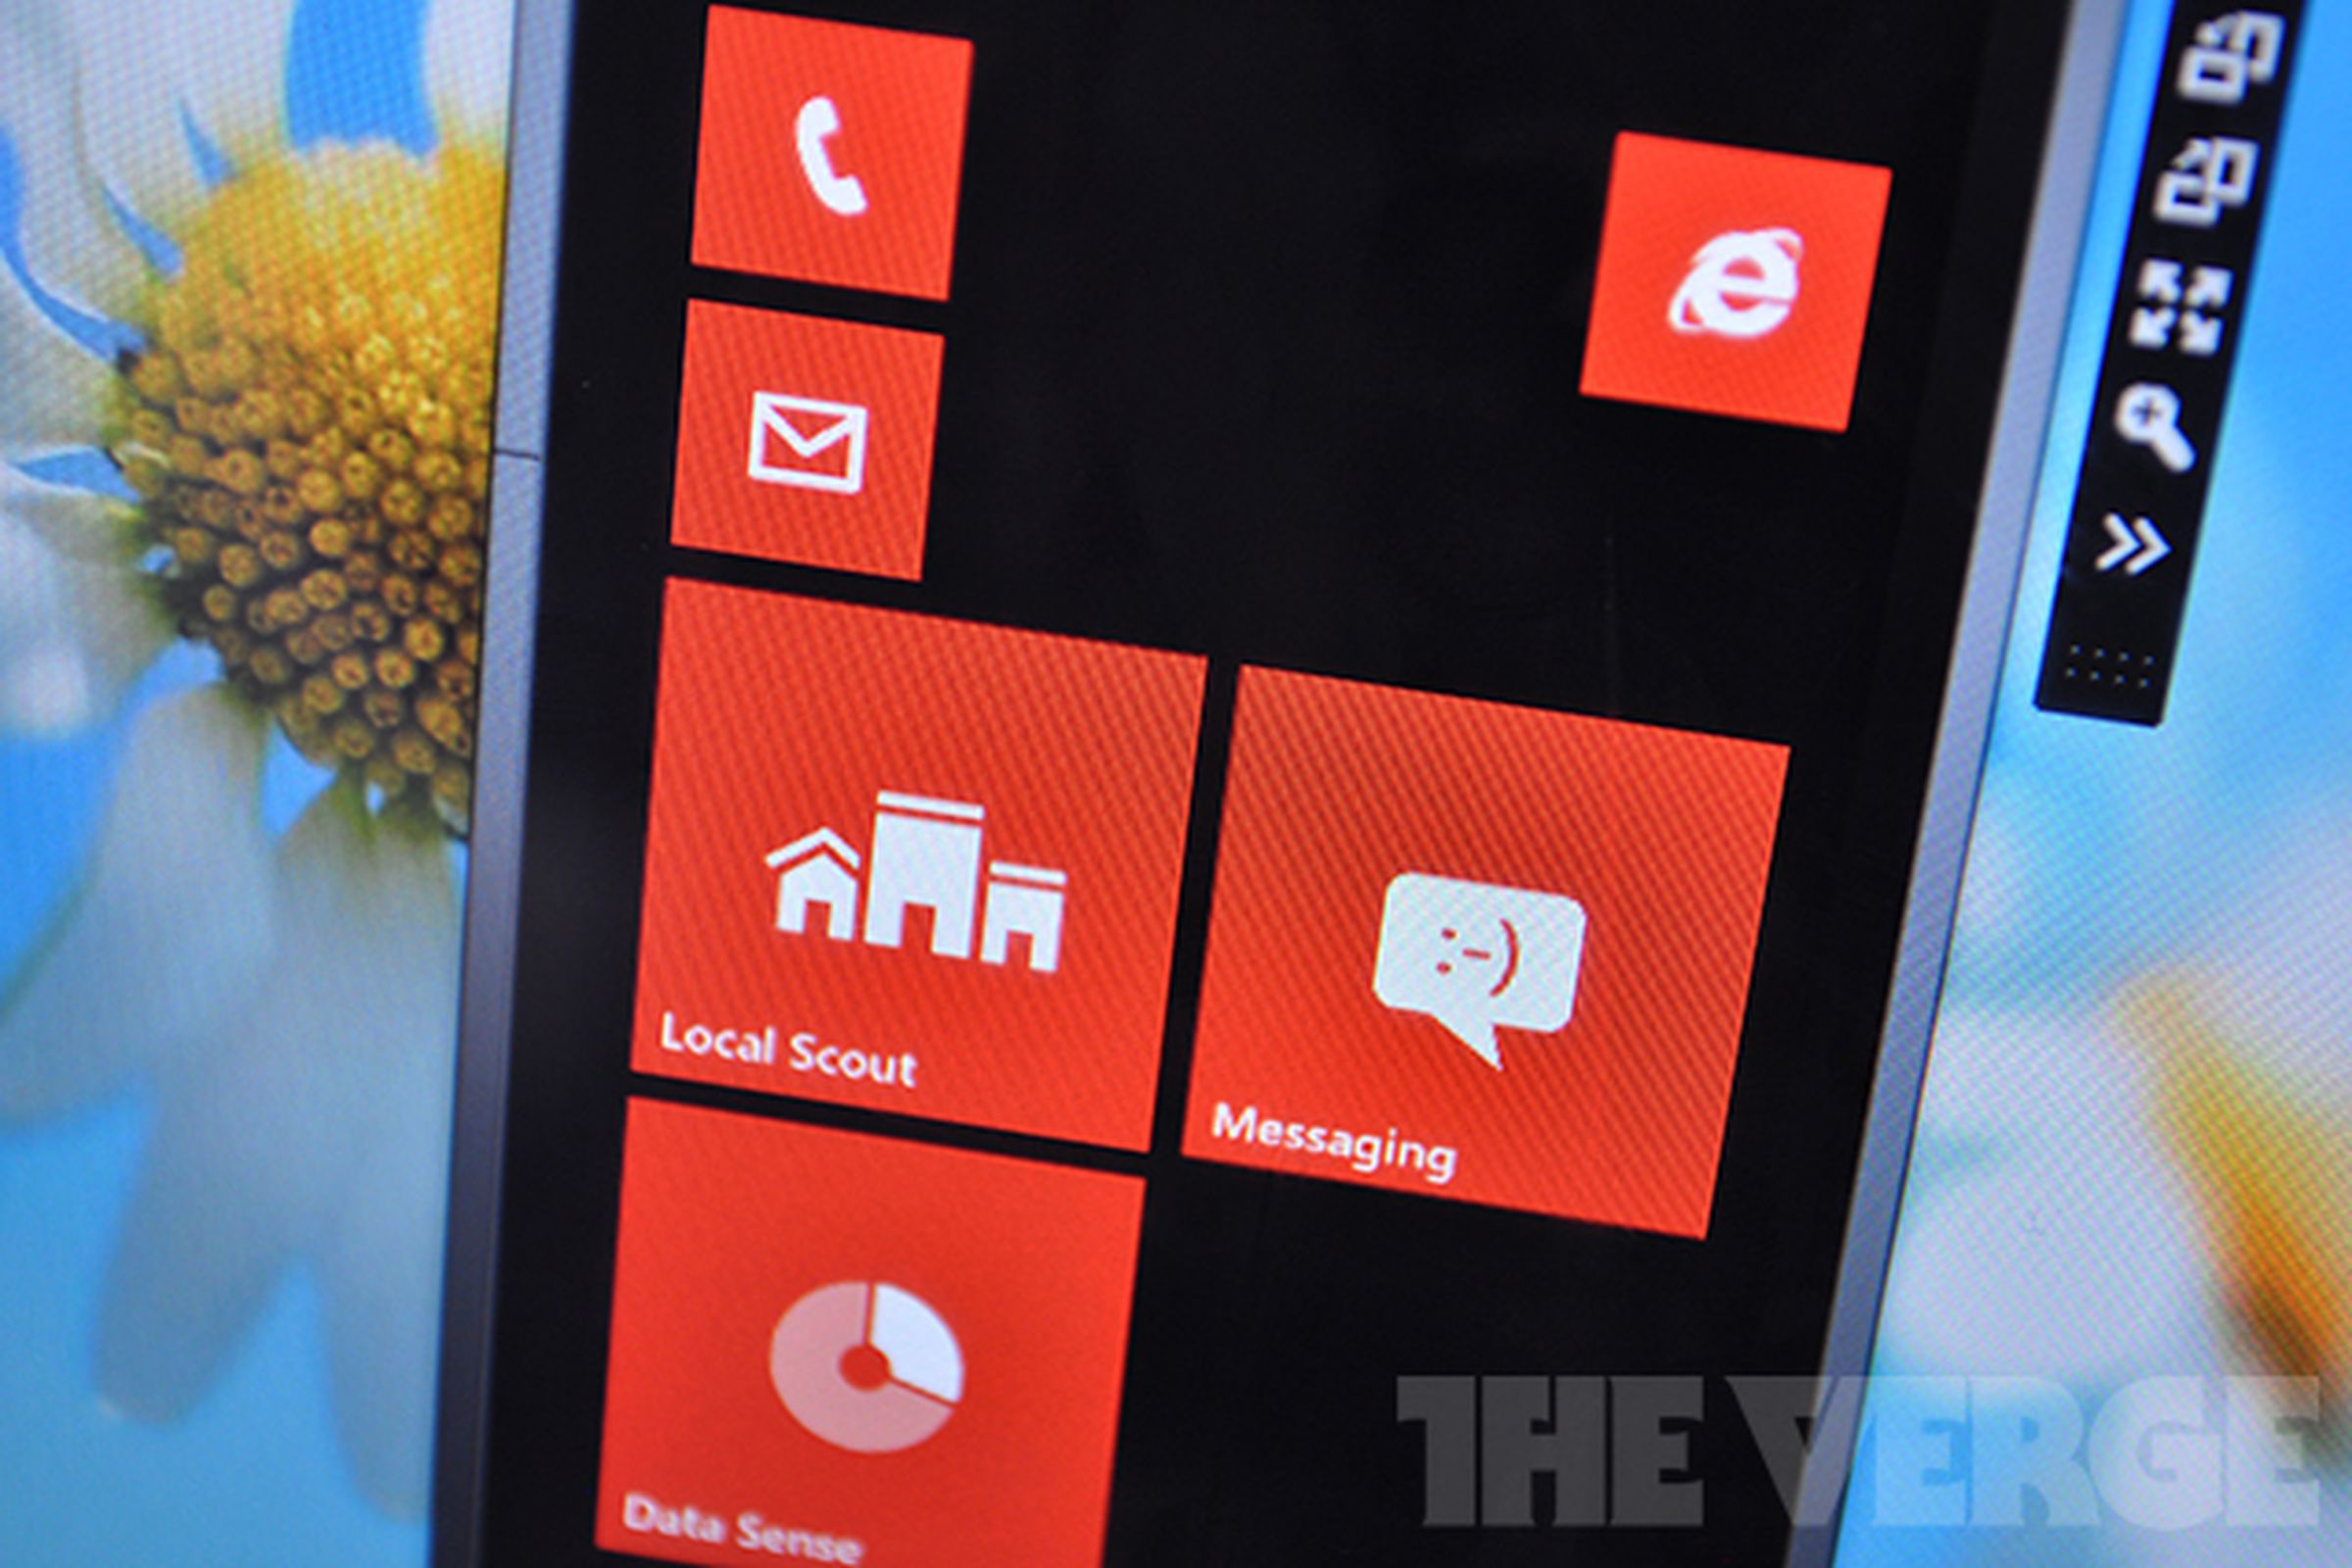 Windows Phone 8 SDK